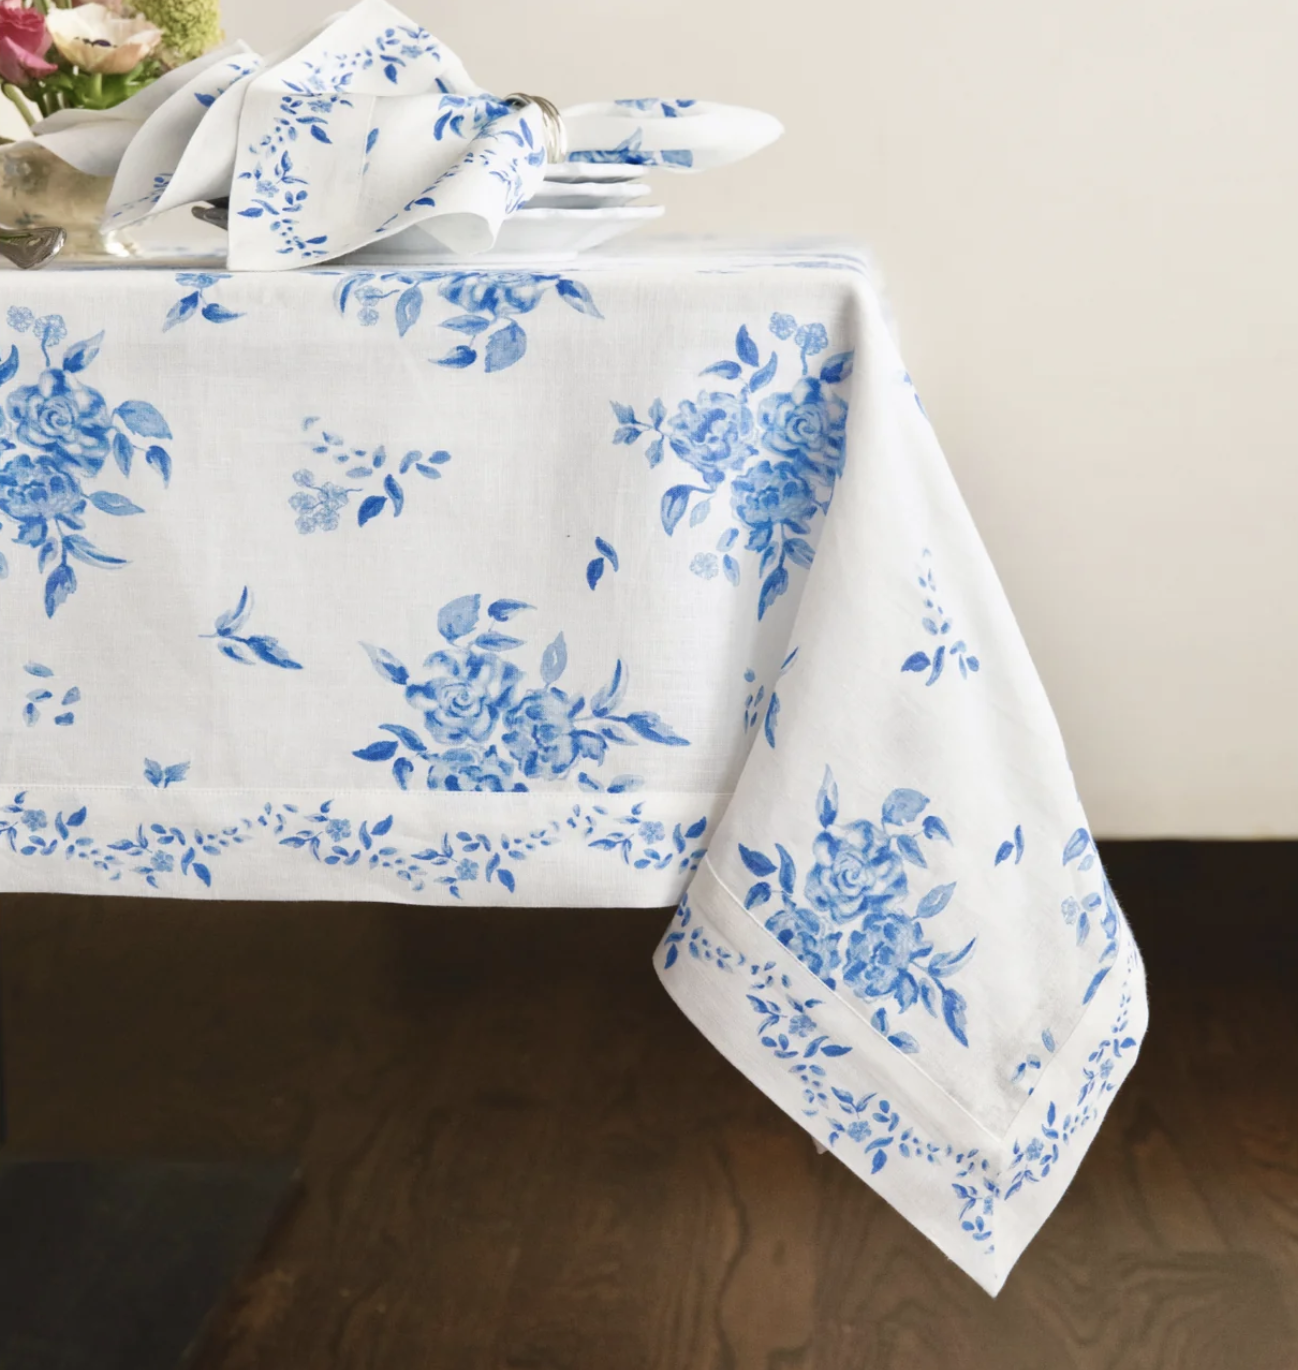 Jolie - Tablecloth